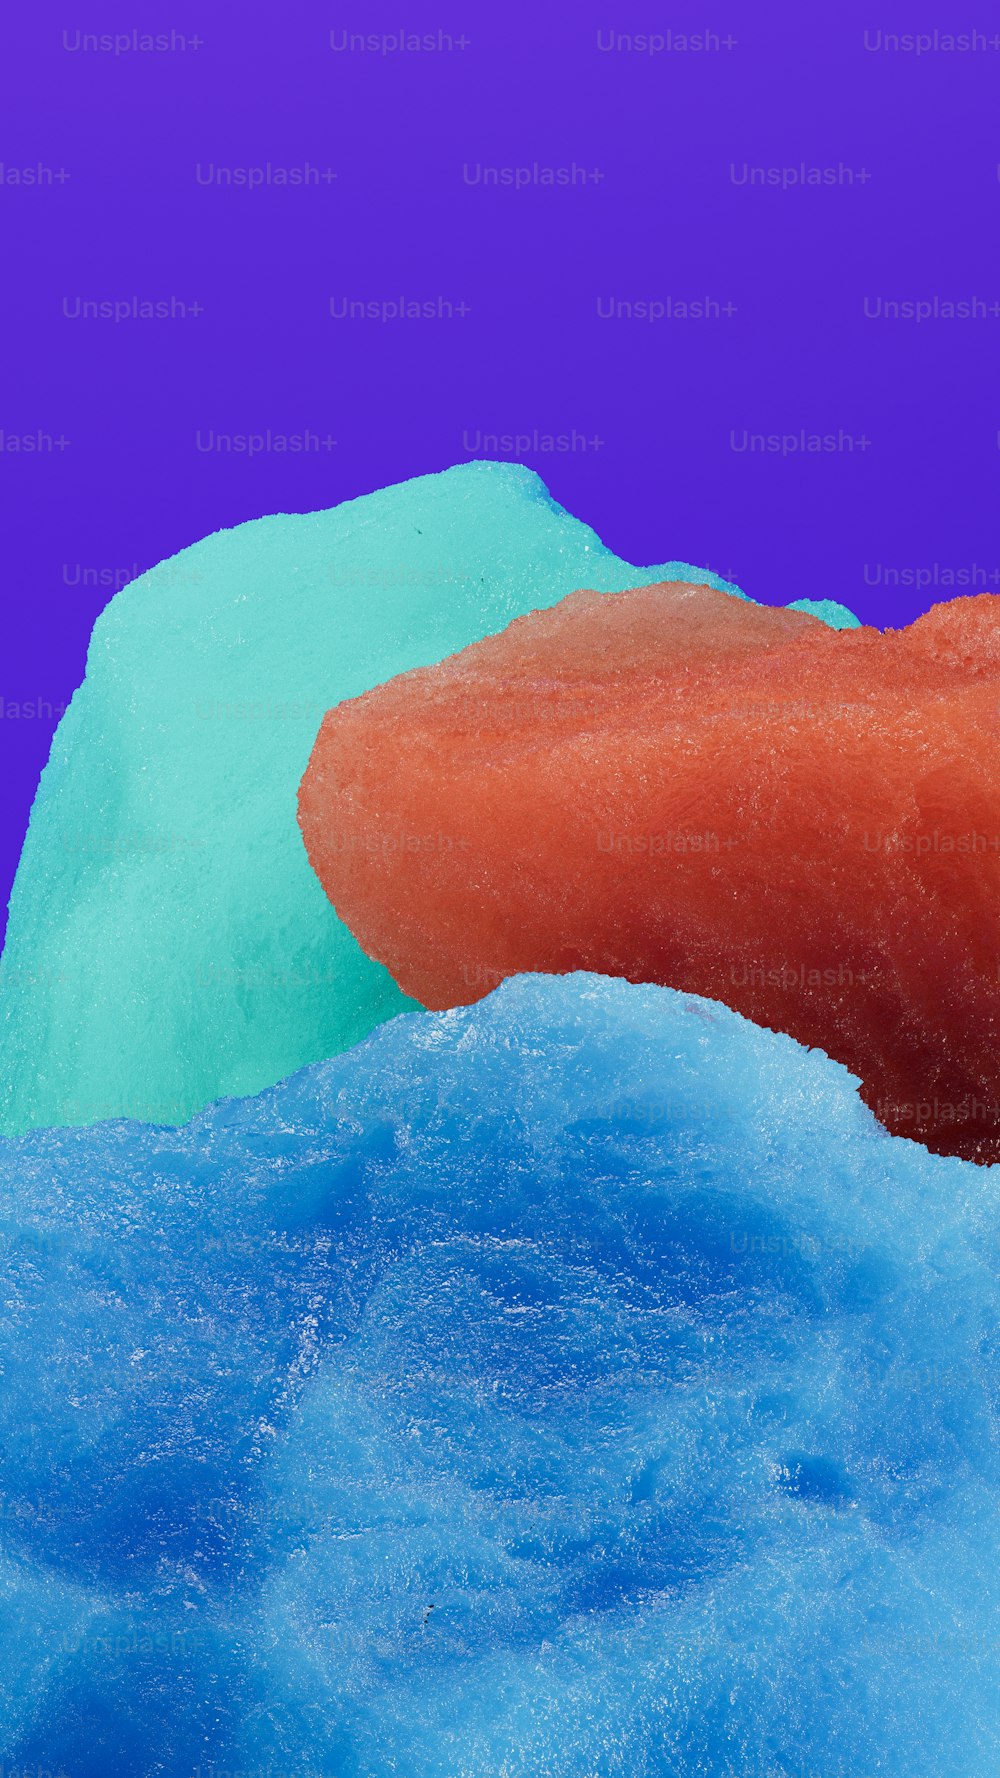 a close up of a doughnut on a blue surface